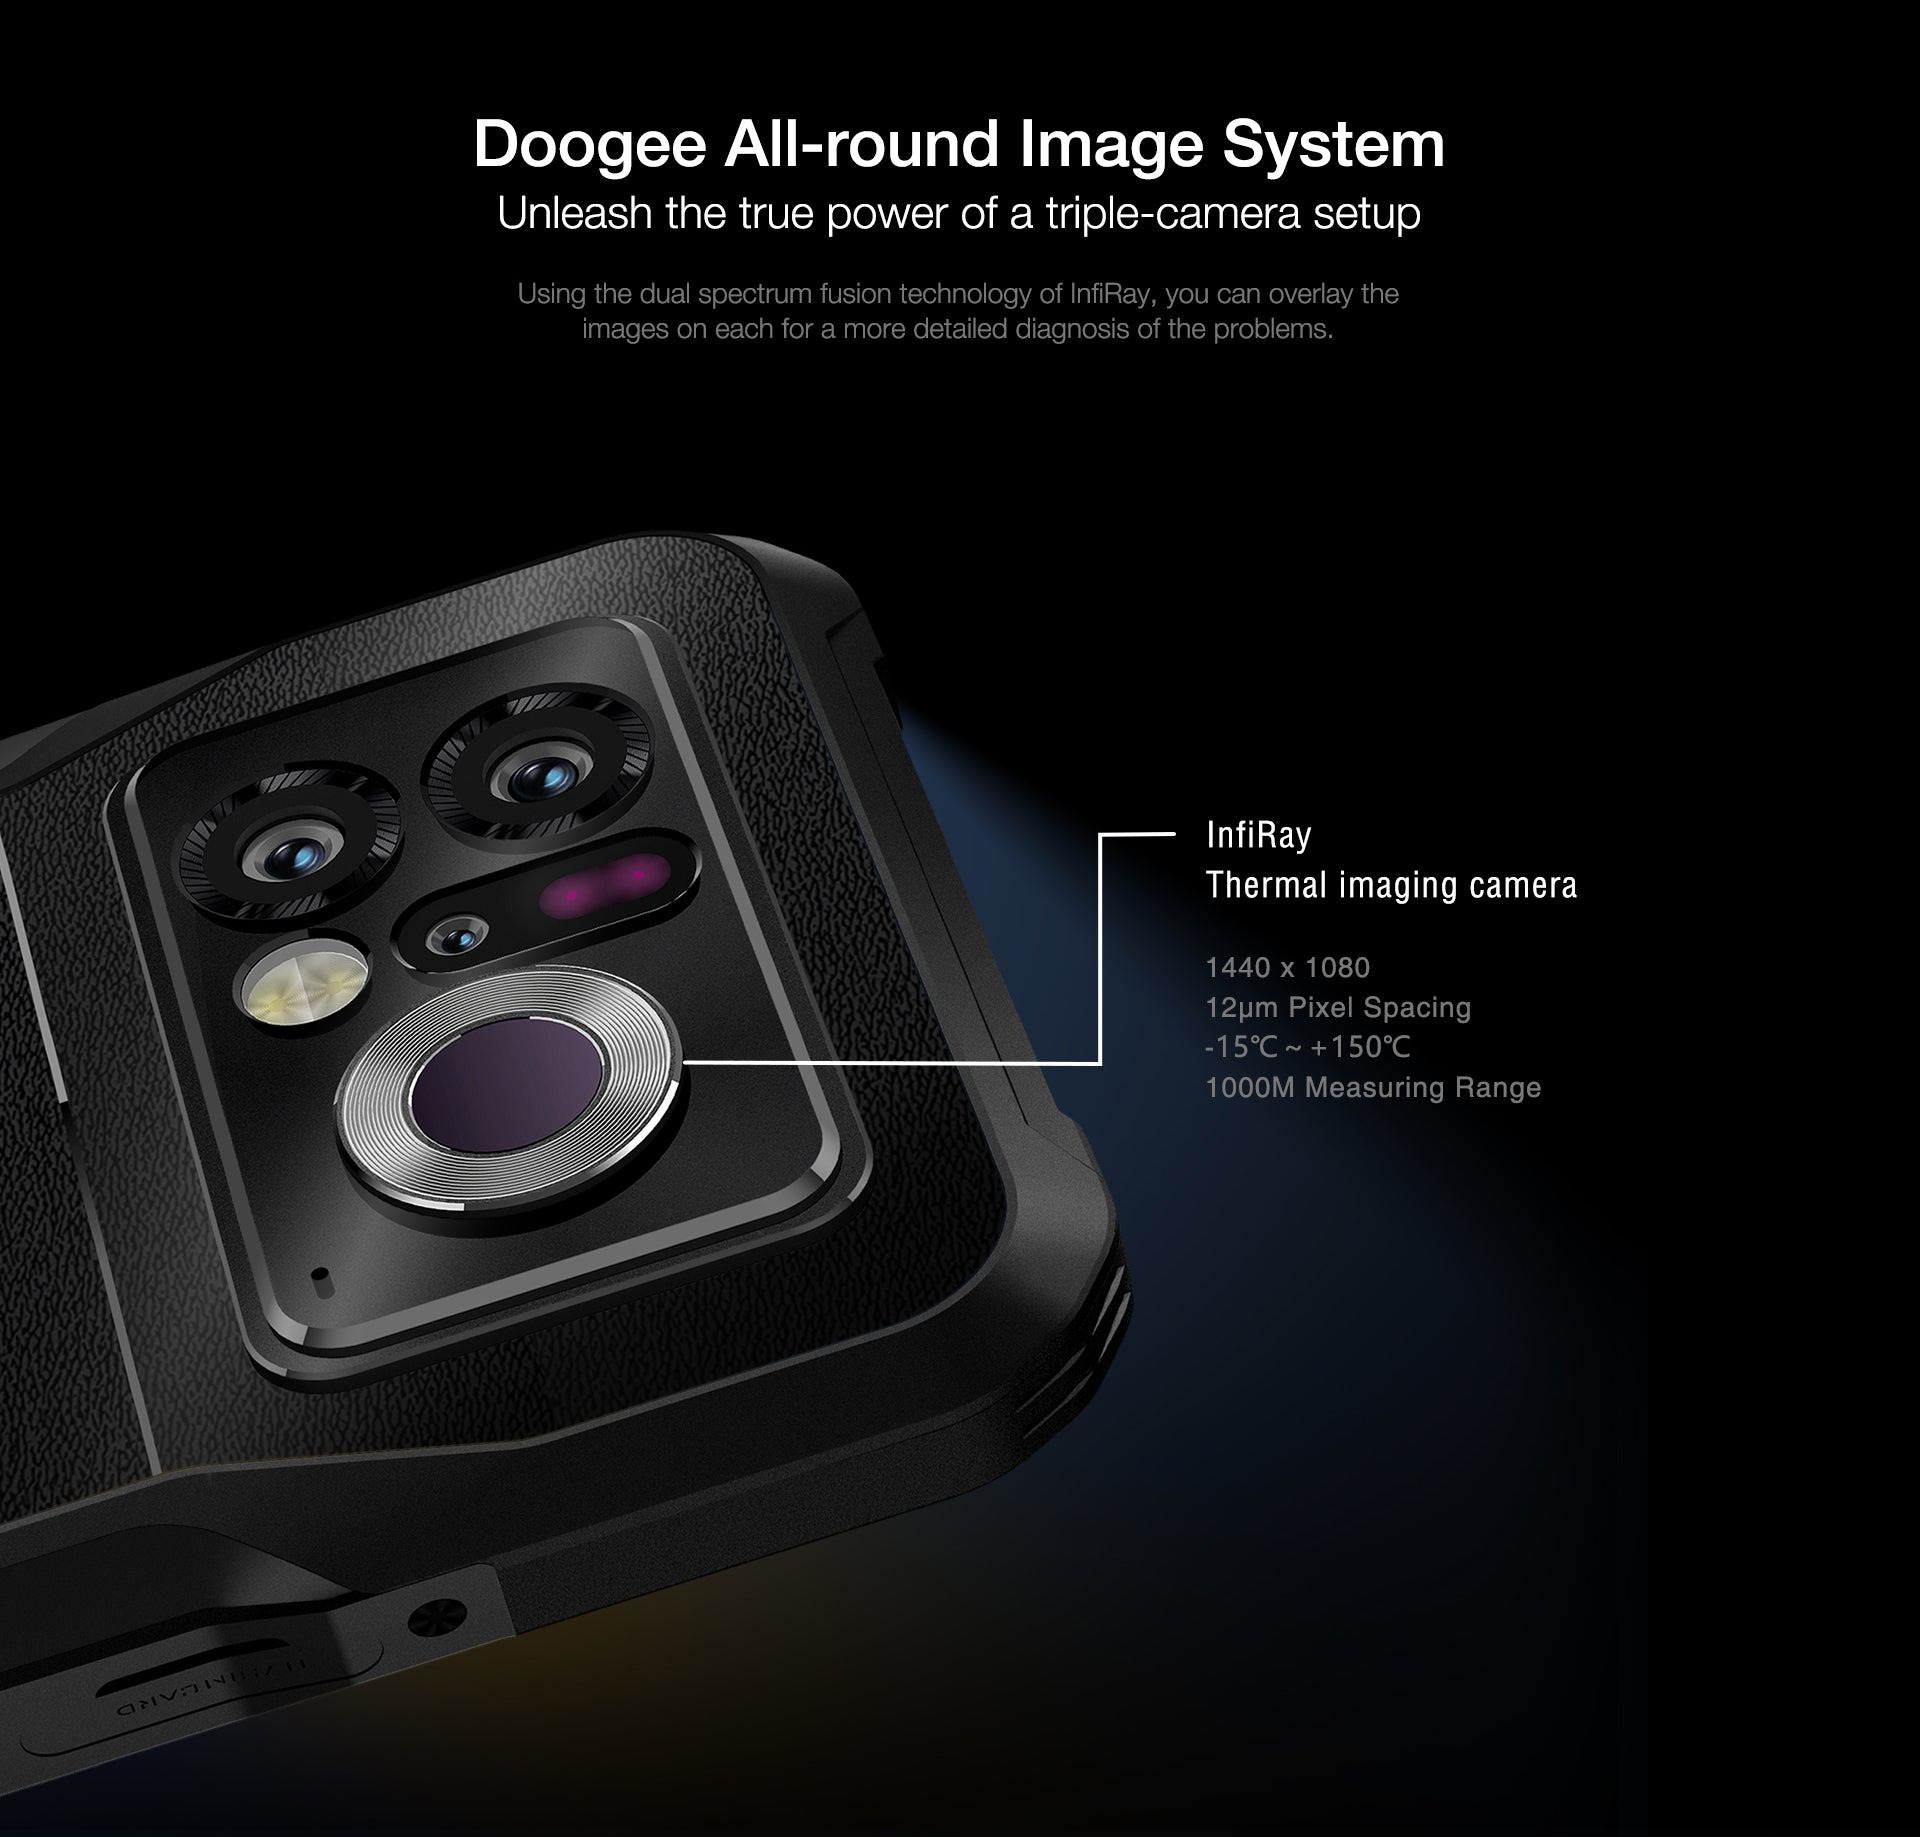 Hệ thống camera nhiệt trên Doogee-v20-pro-saigonphone.com